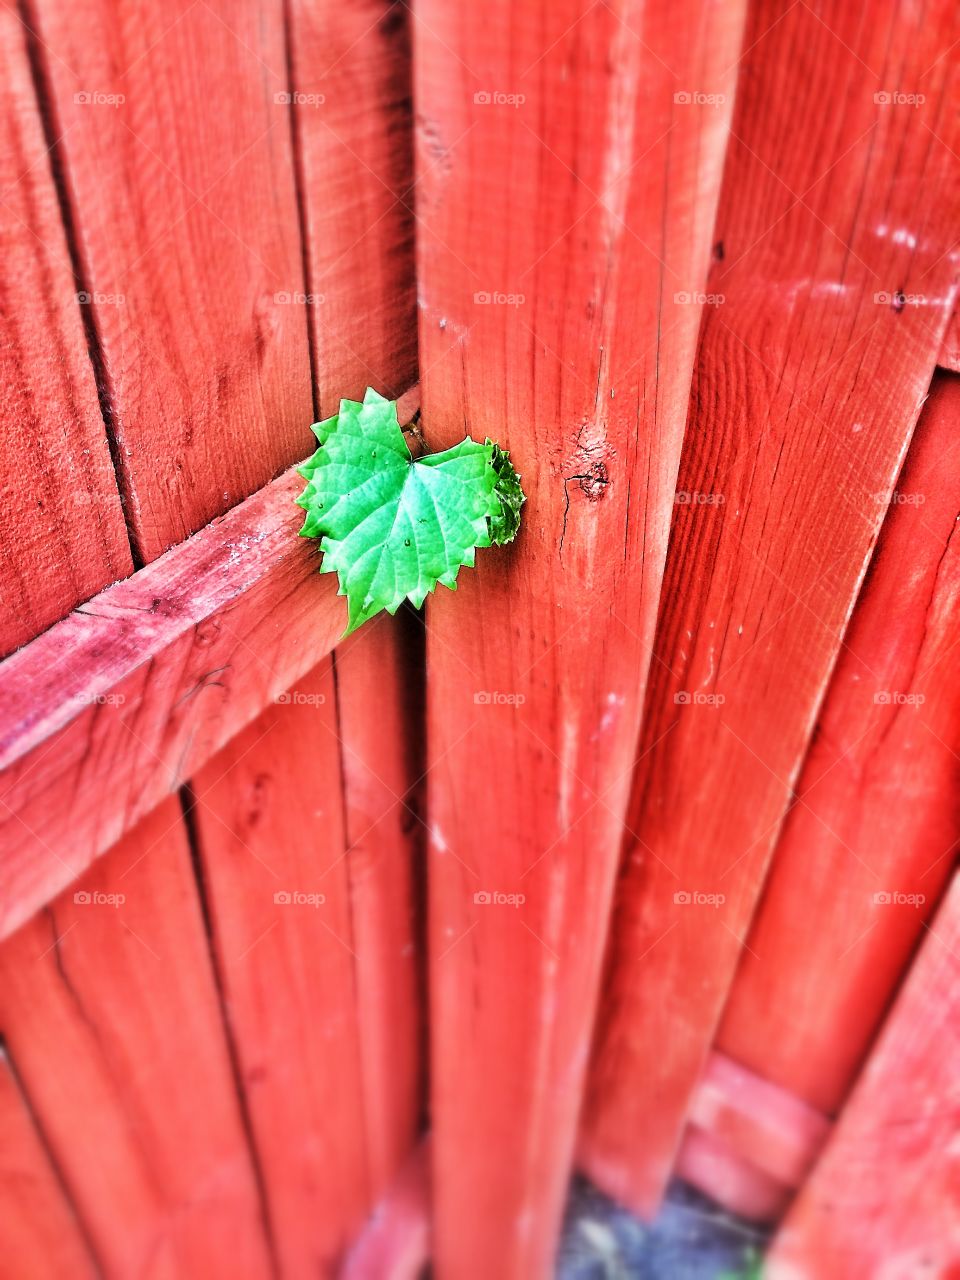 Wooden Love. A heart shaped flower growing through a wooden fence. 